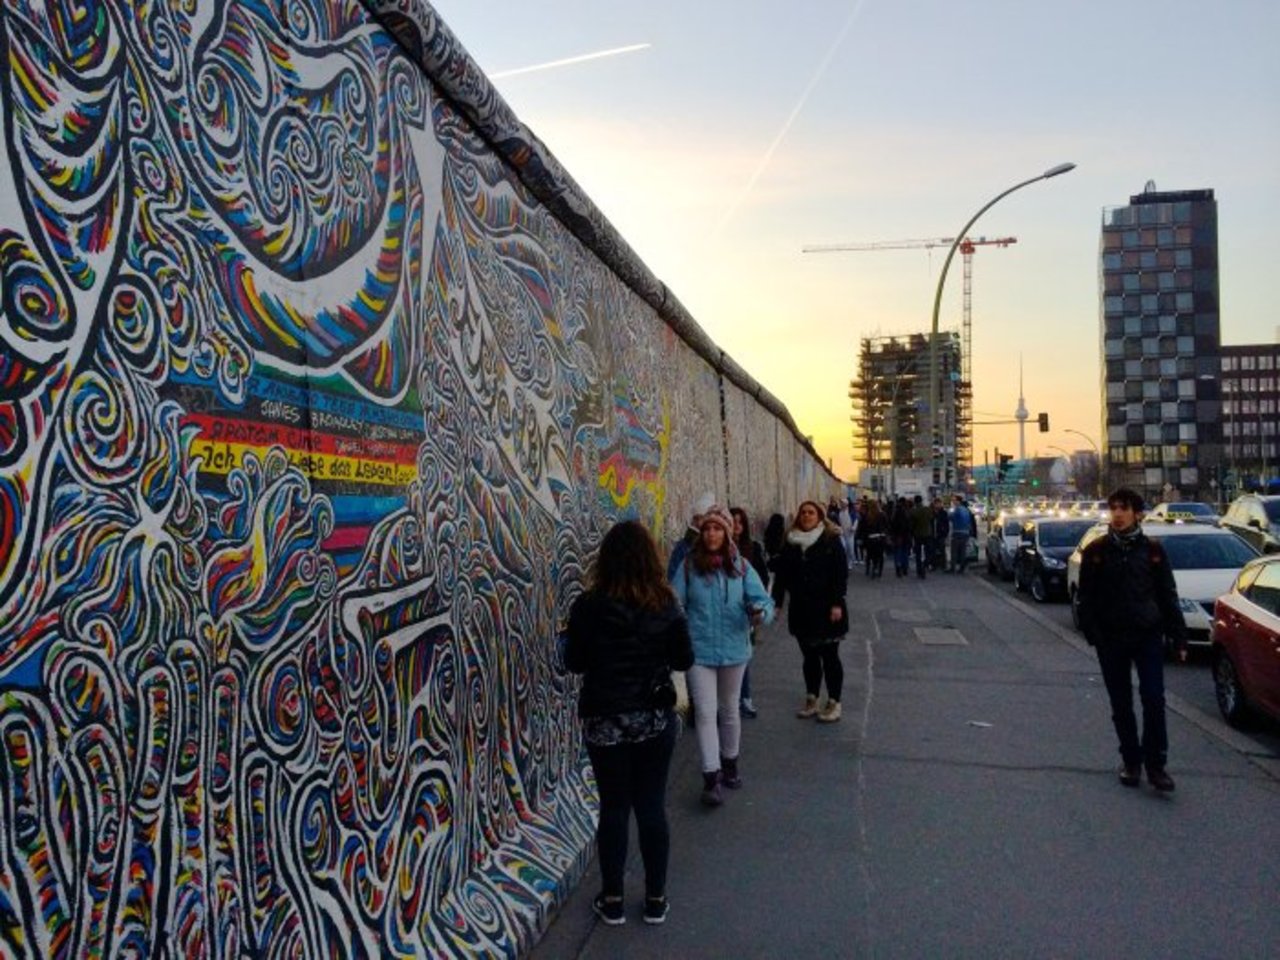 Berlin Wall, East Side Gallery & the passage of time: http://buff.ly/2d5Rjjc #travel #Berlin #Streetart https://t.co/S0RwDKfCPB